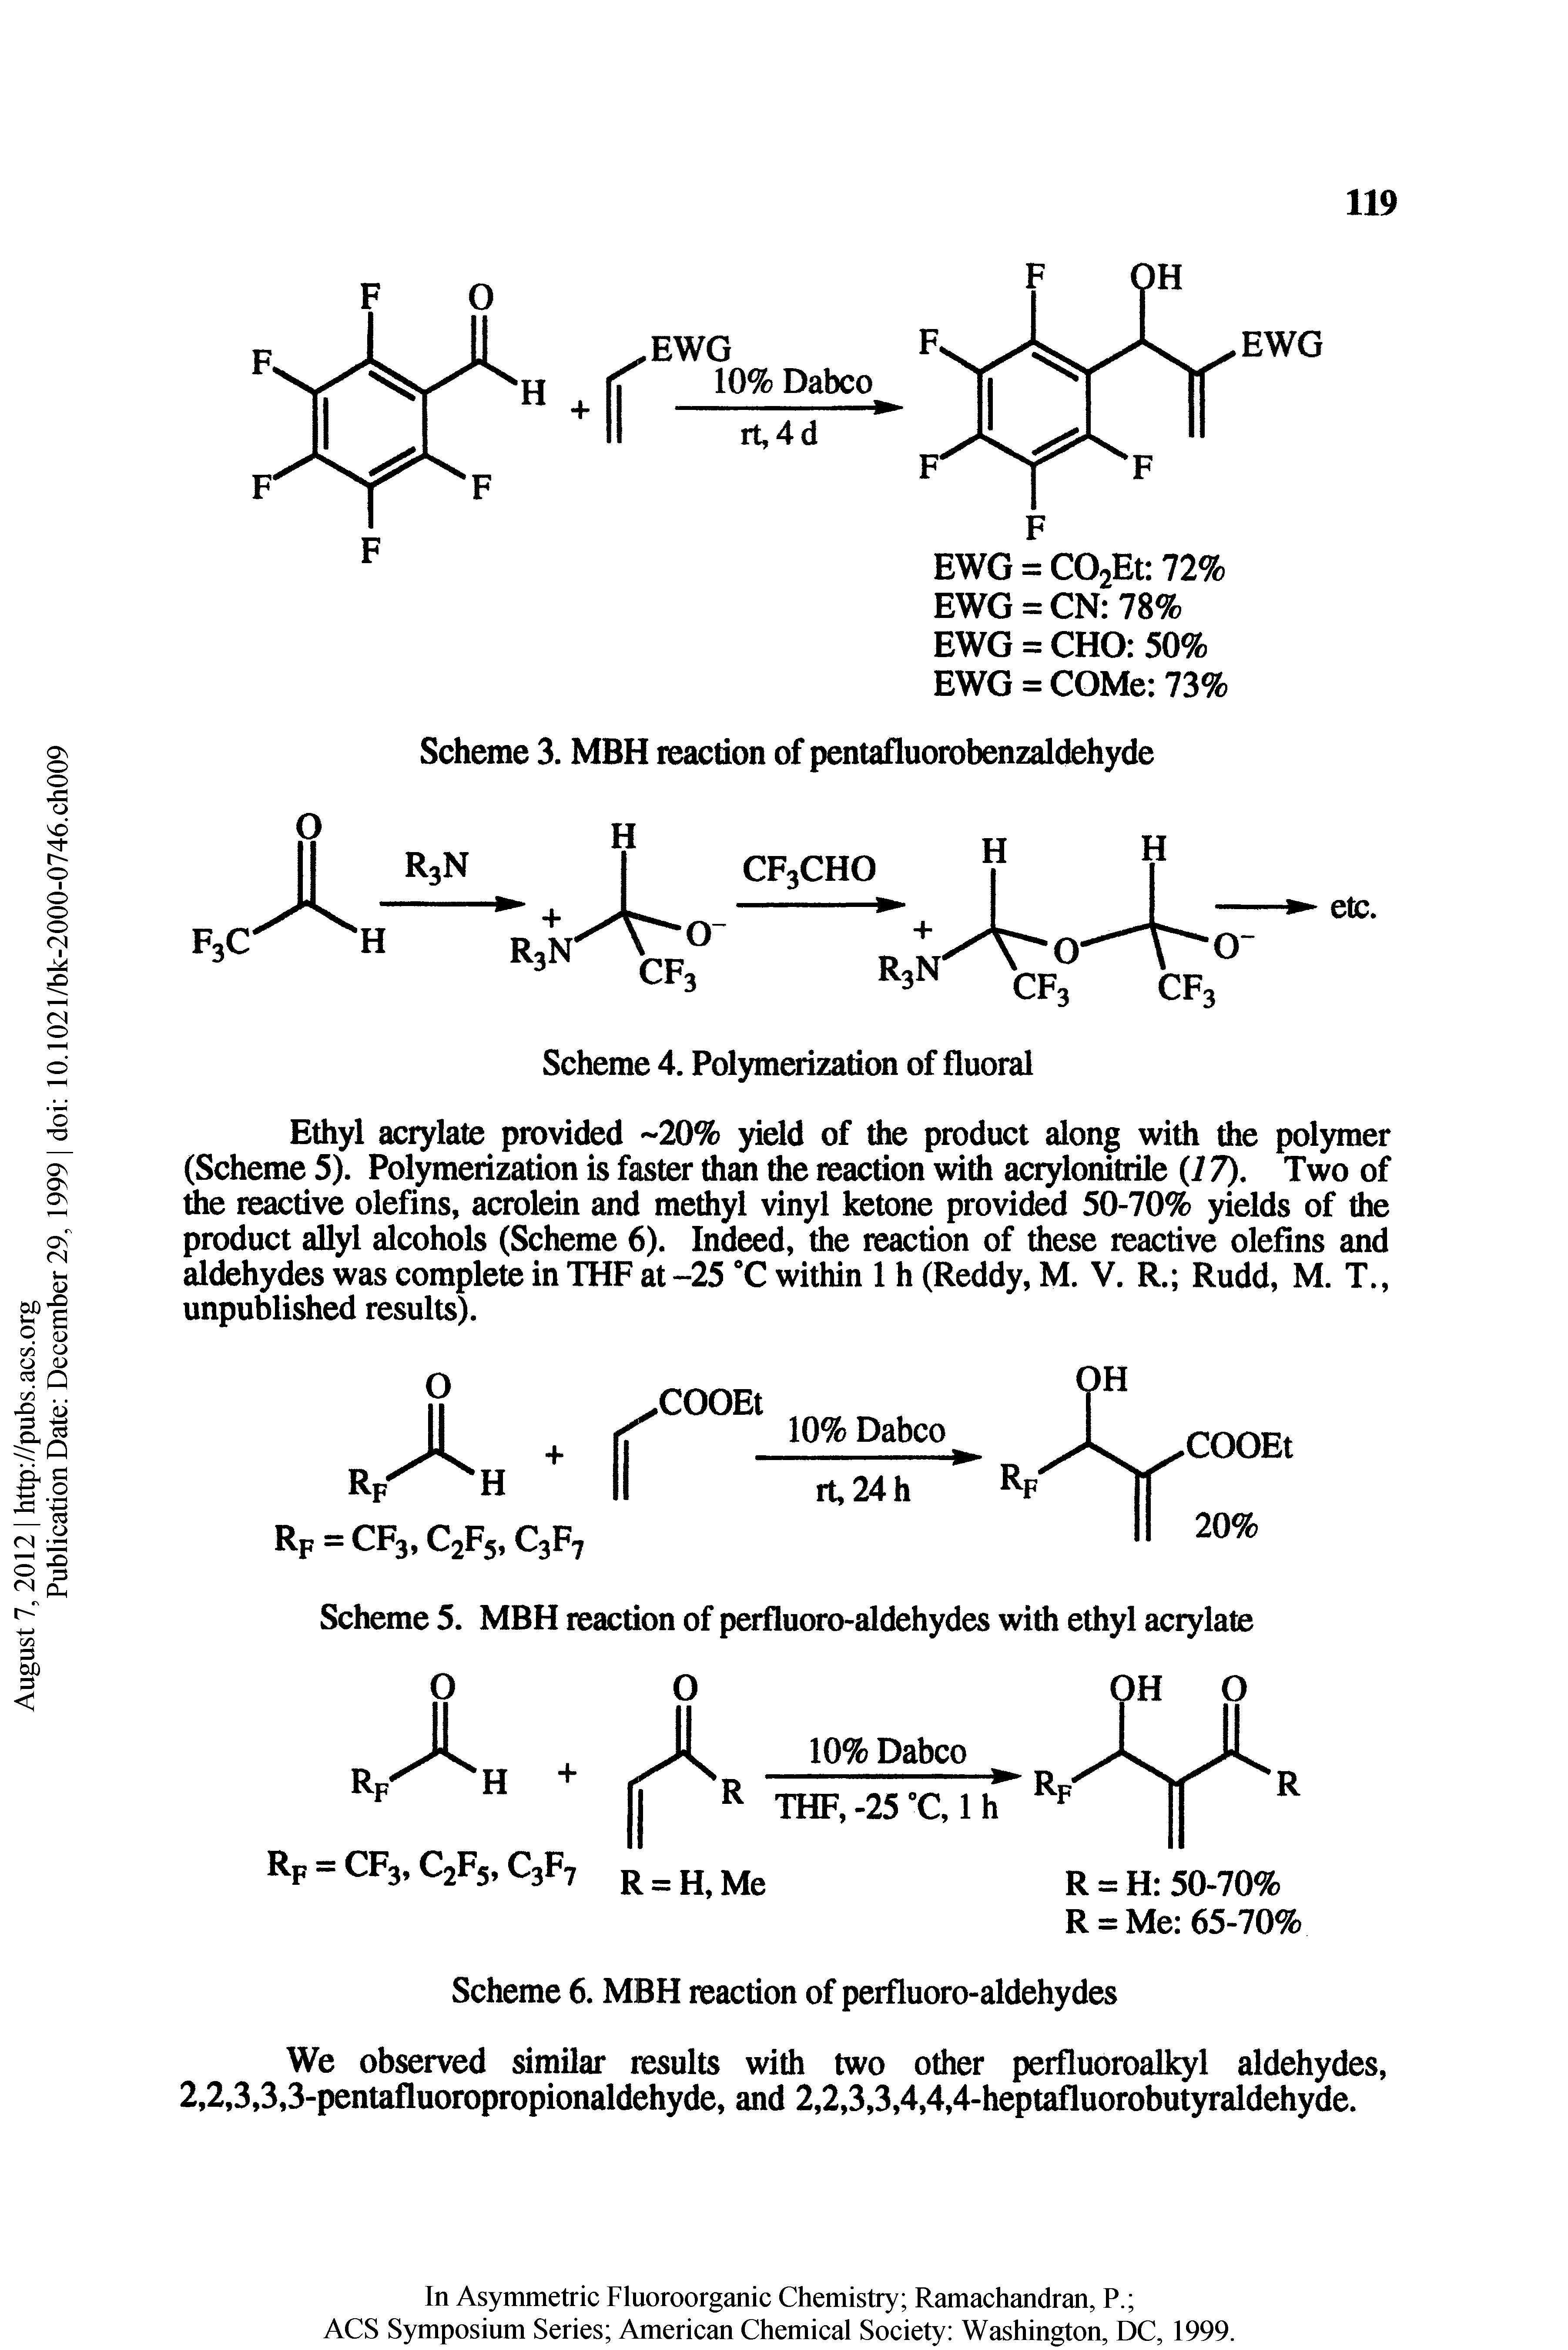 Scheme 5. MBH reaction of perfluoro-aldehydes with ethyl acrylate...